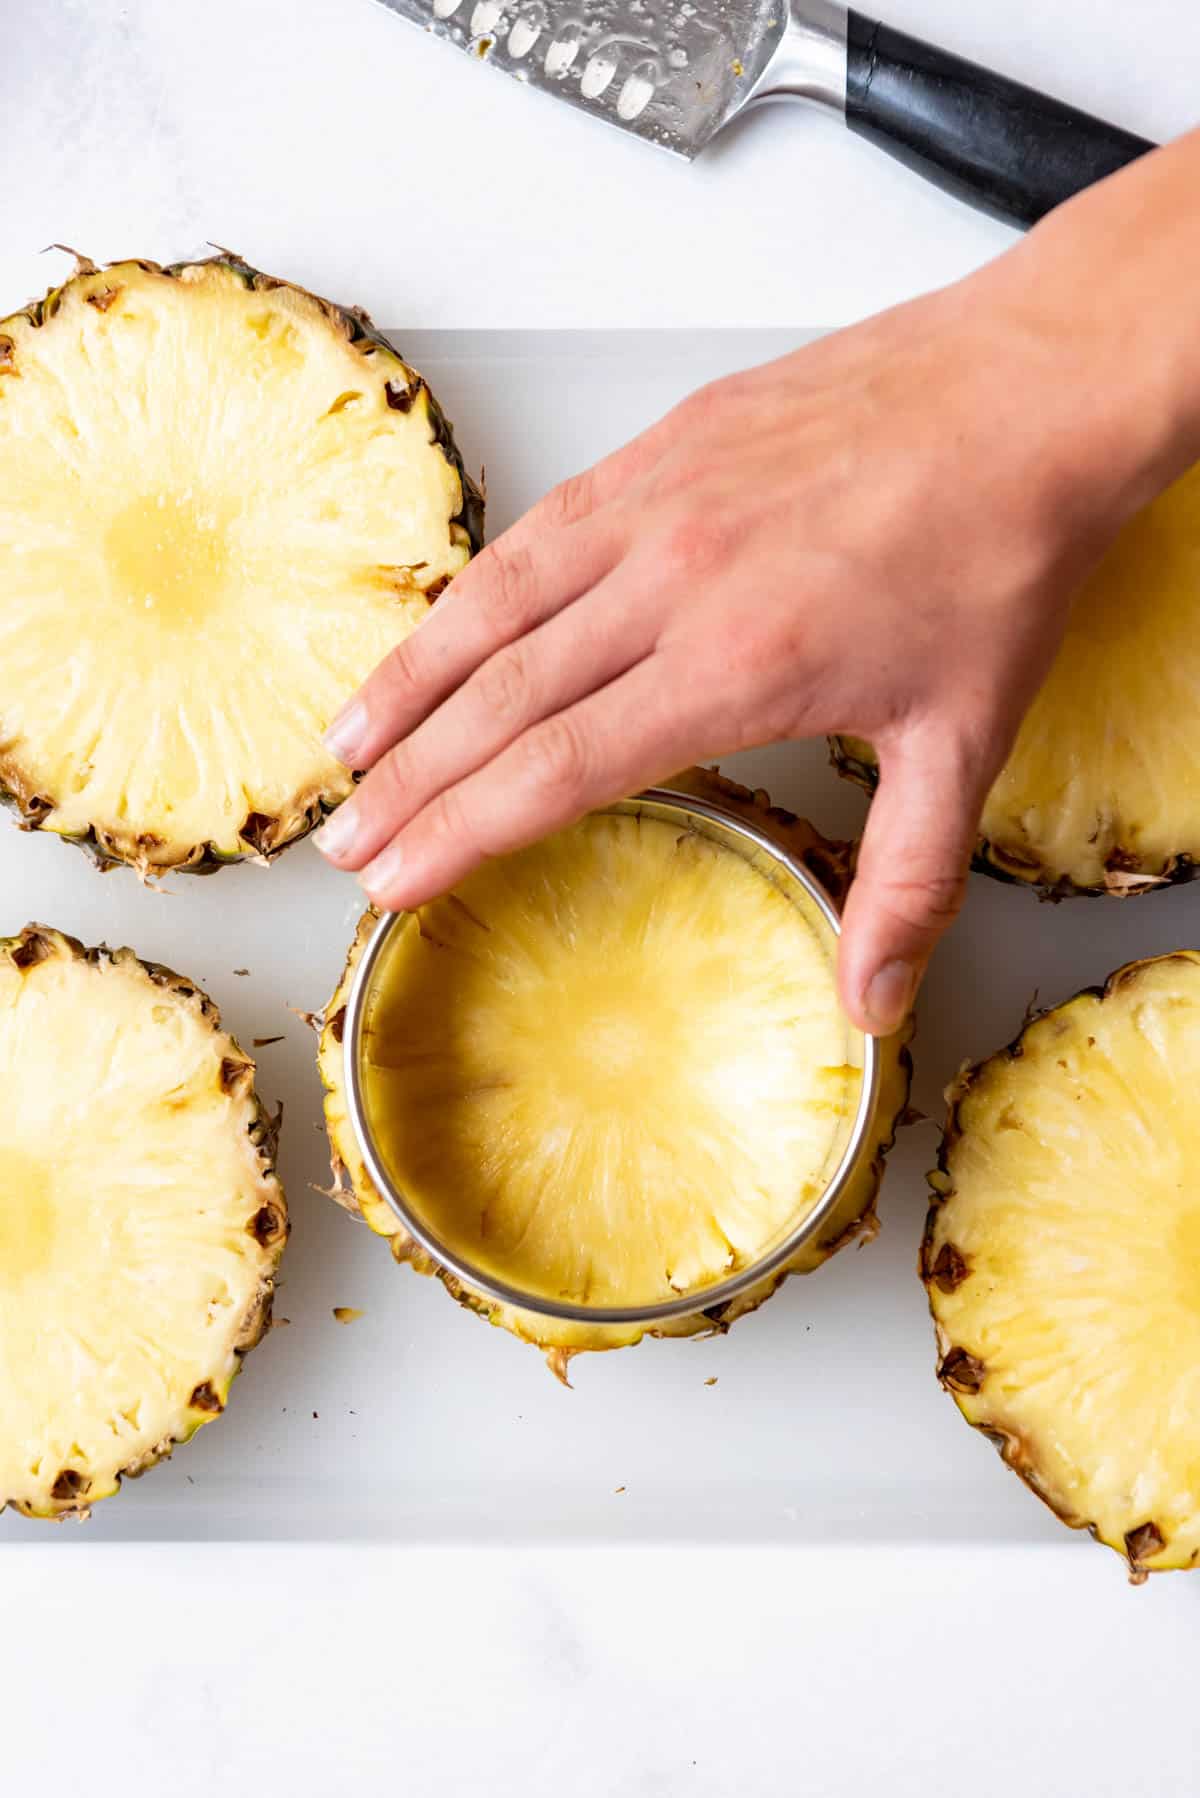 Cutting pineapple rings from freshly sliced pineapple.